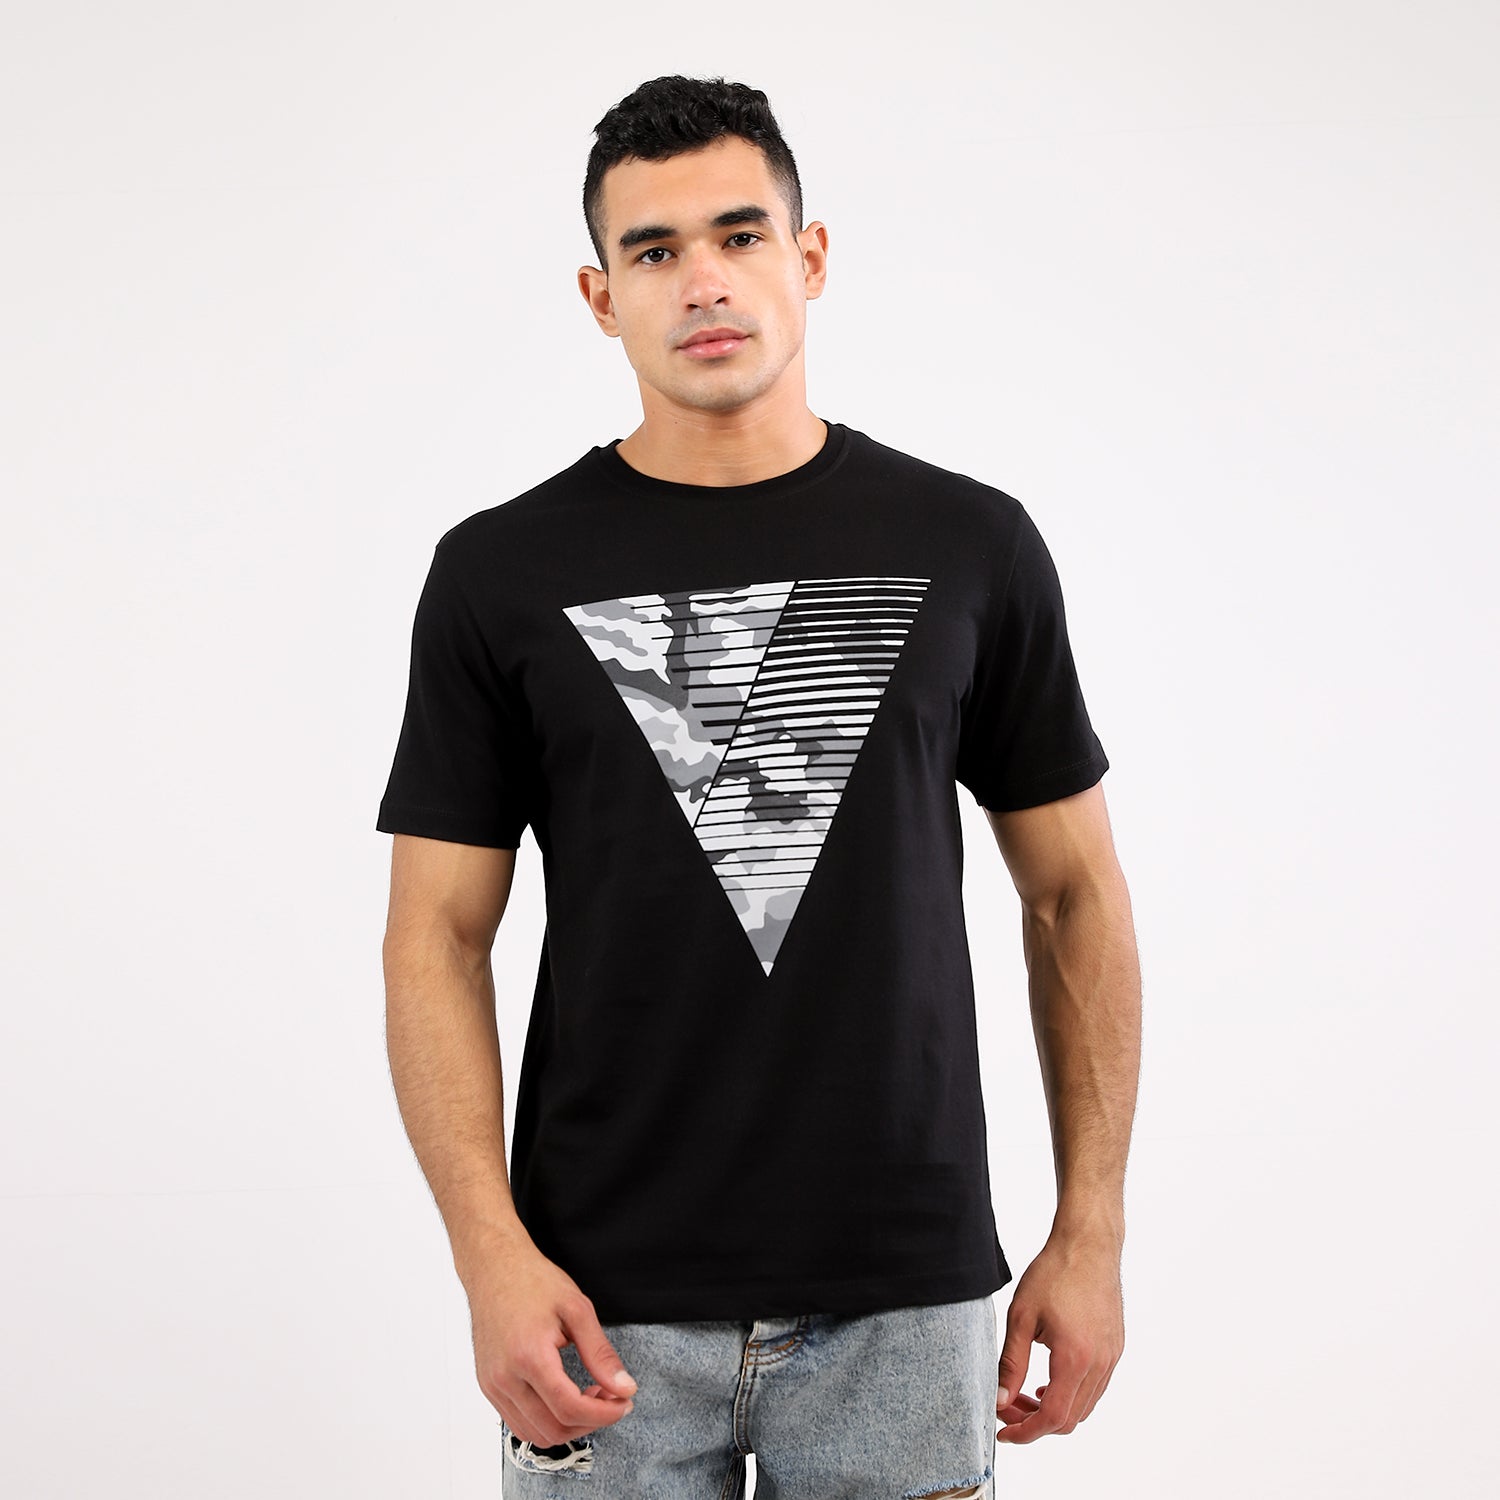 Army Triangle Tshirt For Men -110704020